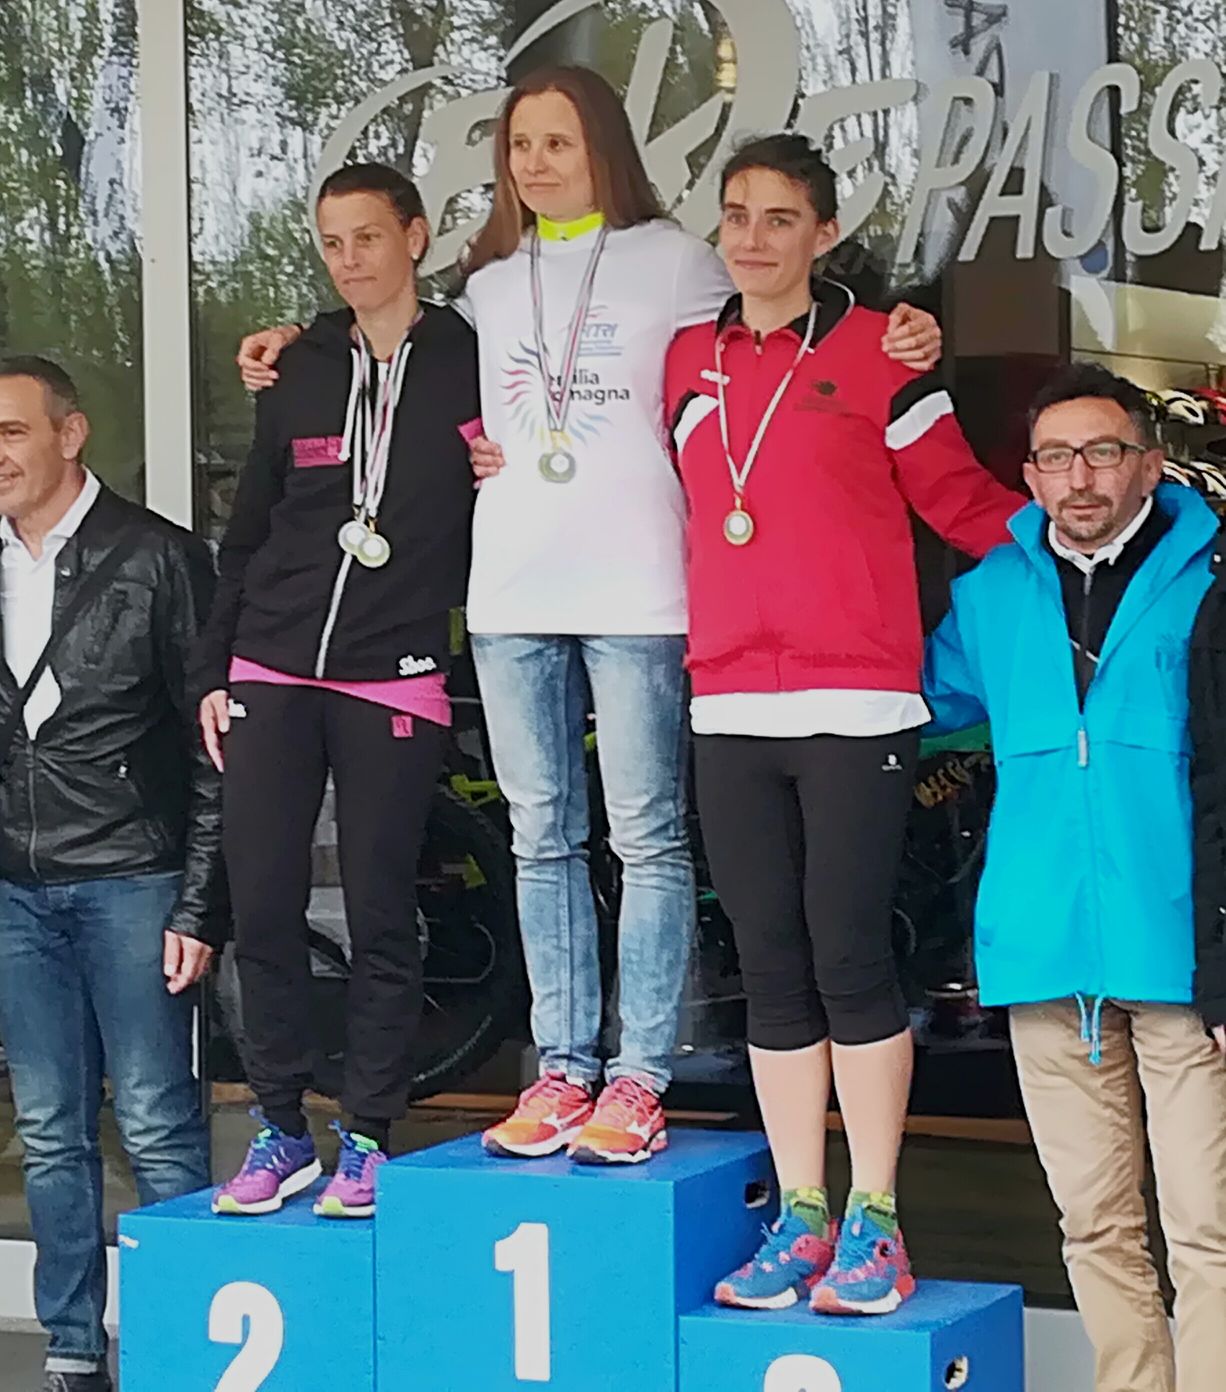 Emilia-Romagna Campionato Regionale Duathlon Sprint, il resoconto